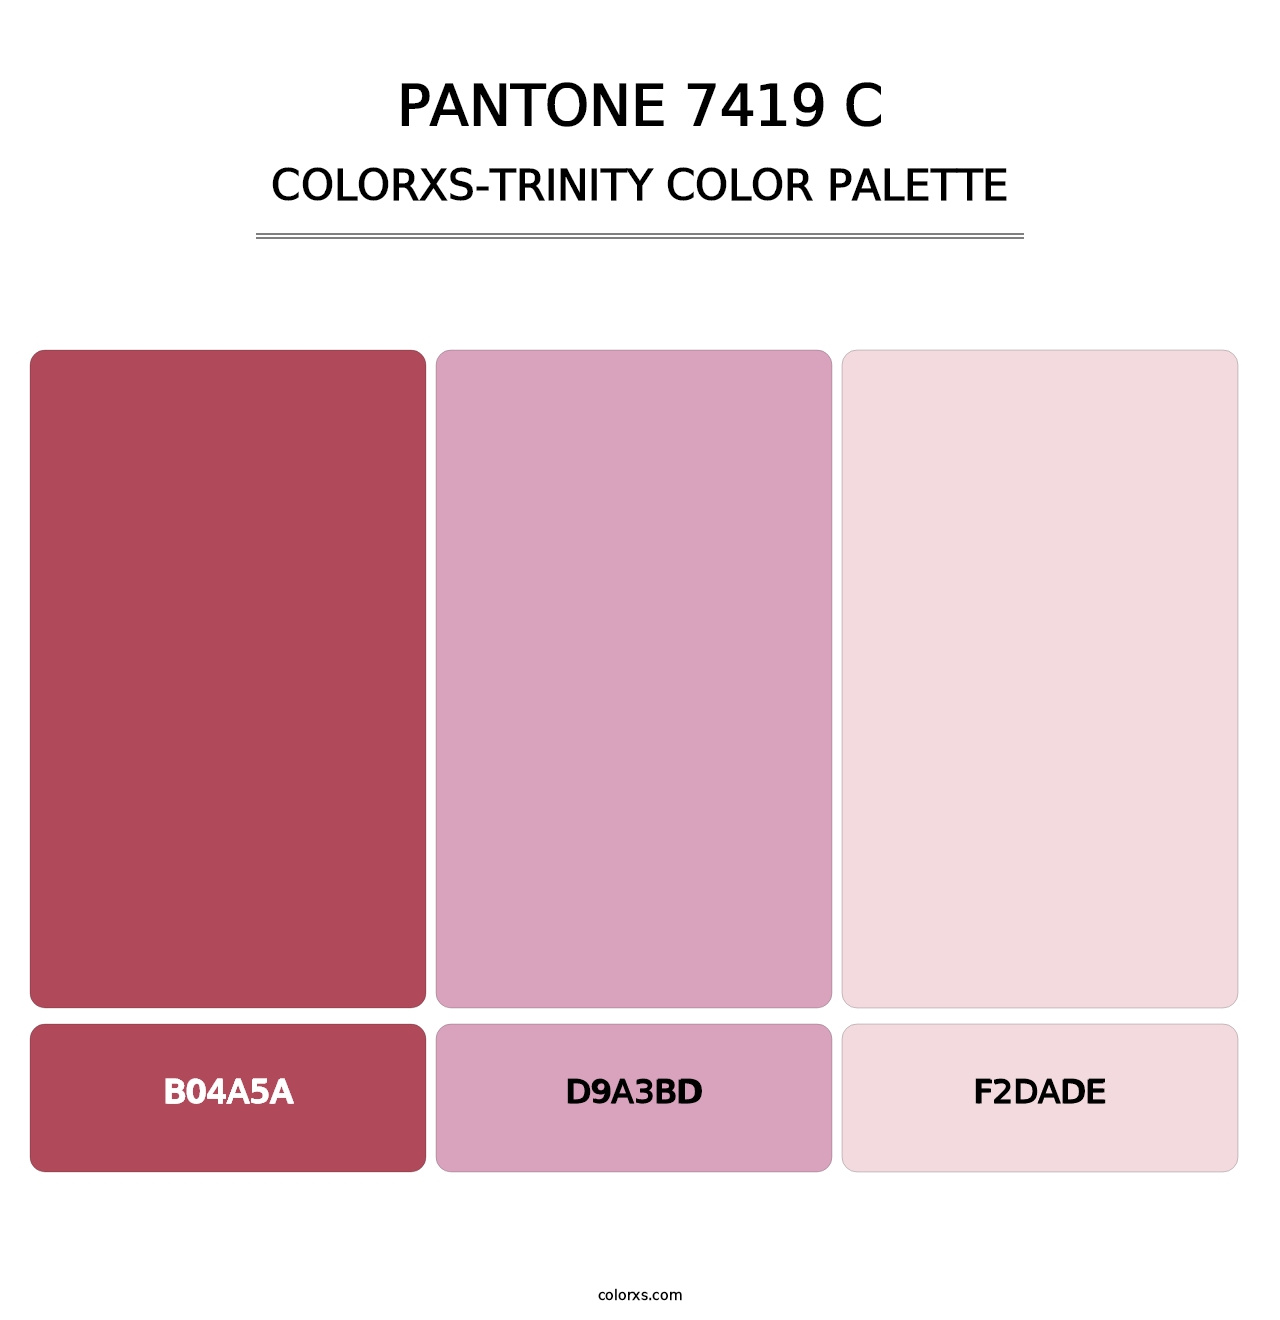 PANTONE 7419 C - Colorxs Trinity Palette